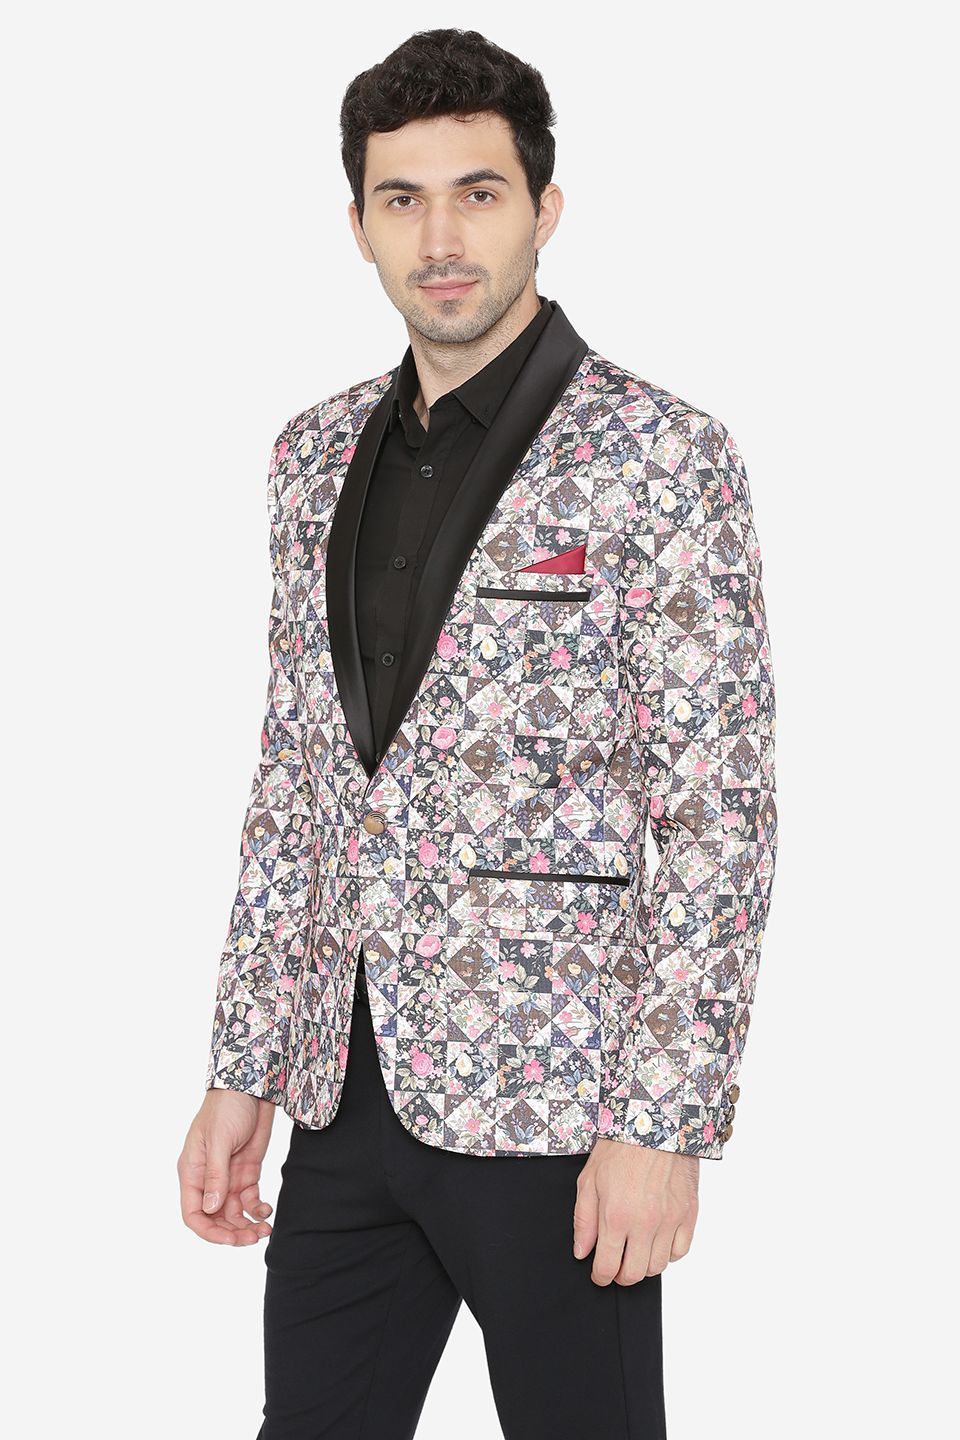 Polyester Fabric MulticolouRed Tuxedo